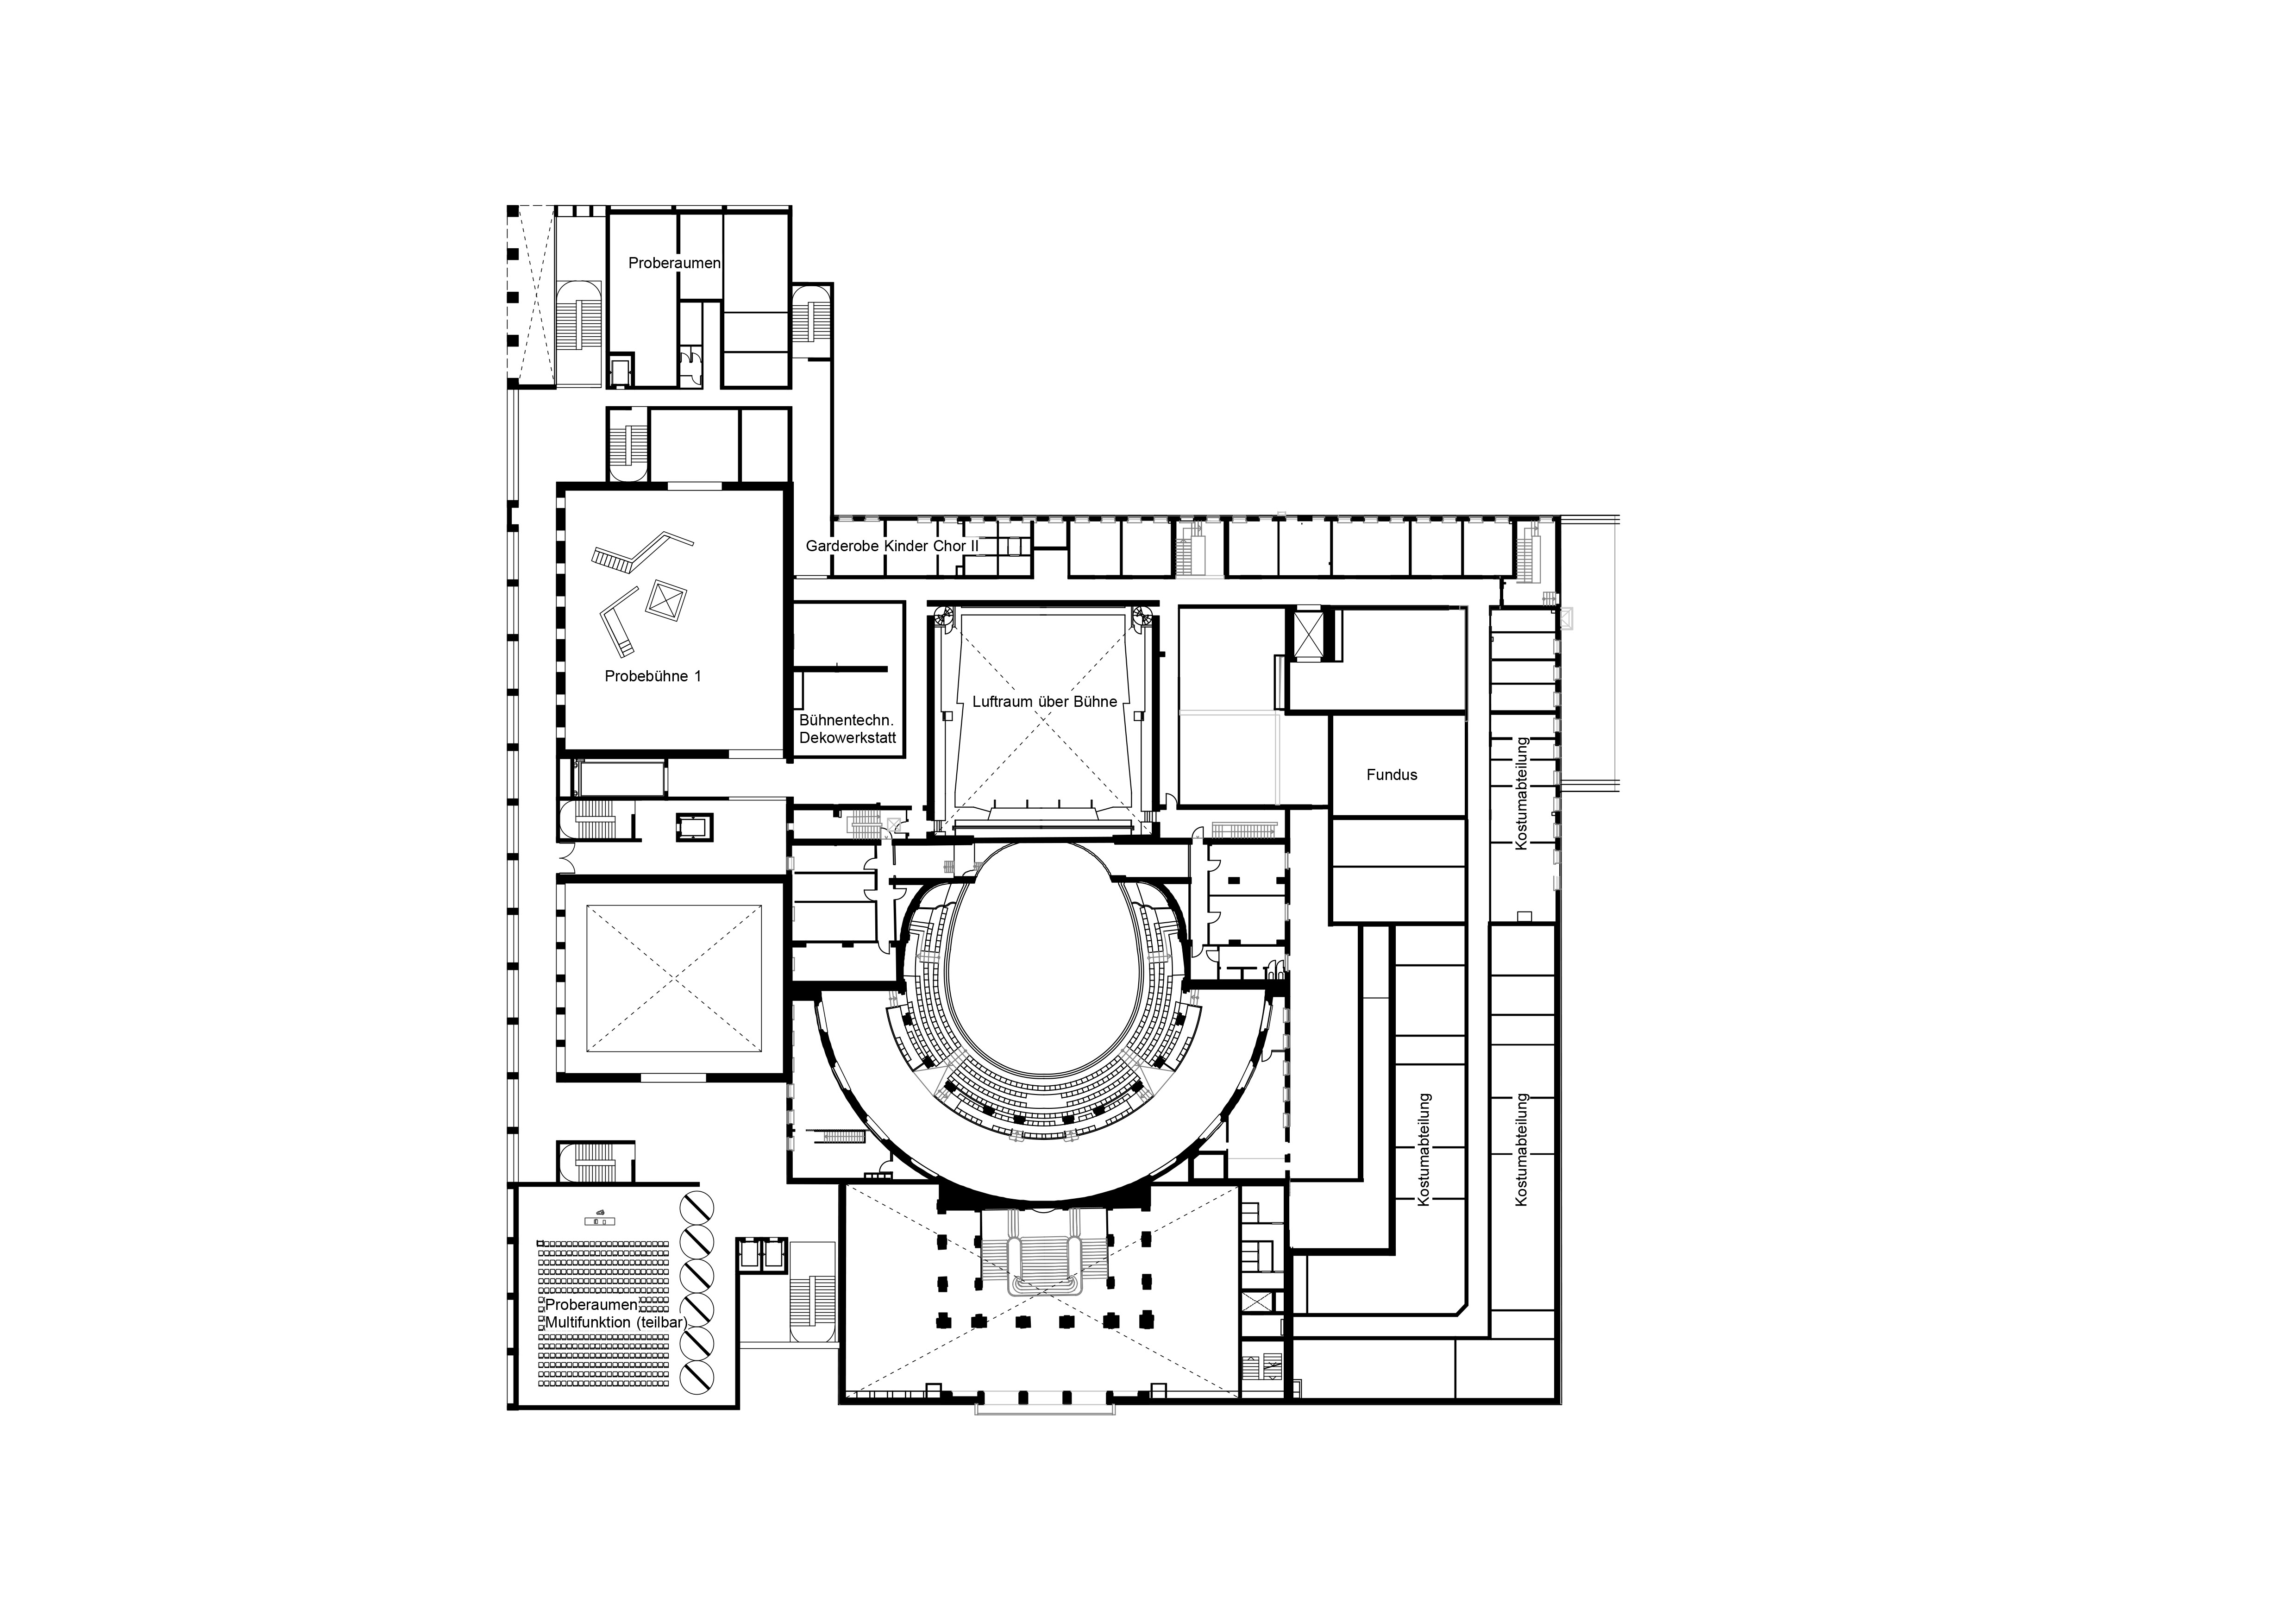 3rd Floor Plan Komische Oper Berlin by Keith Williams Architects